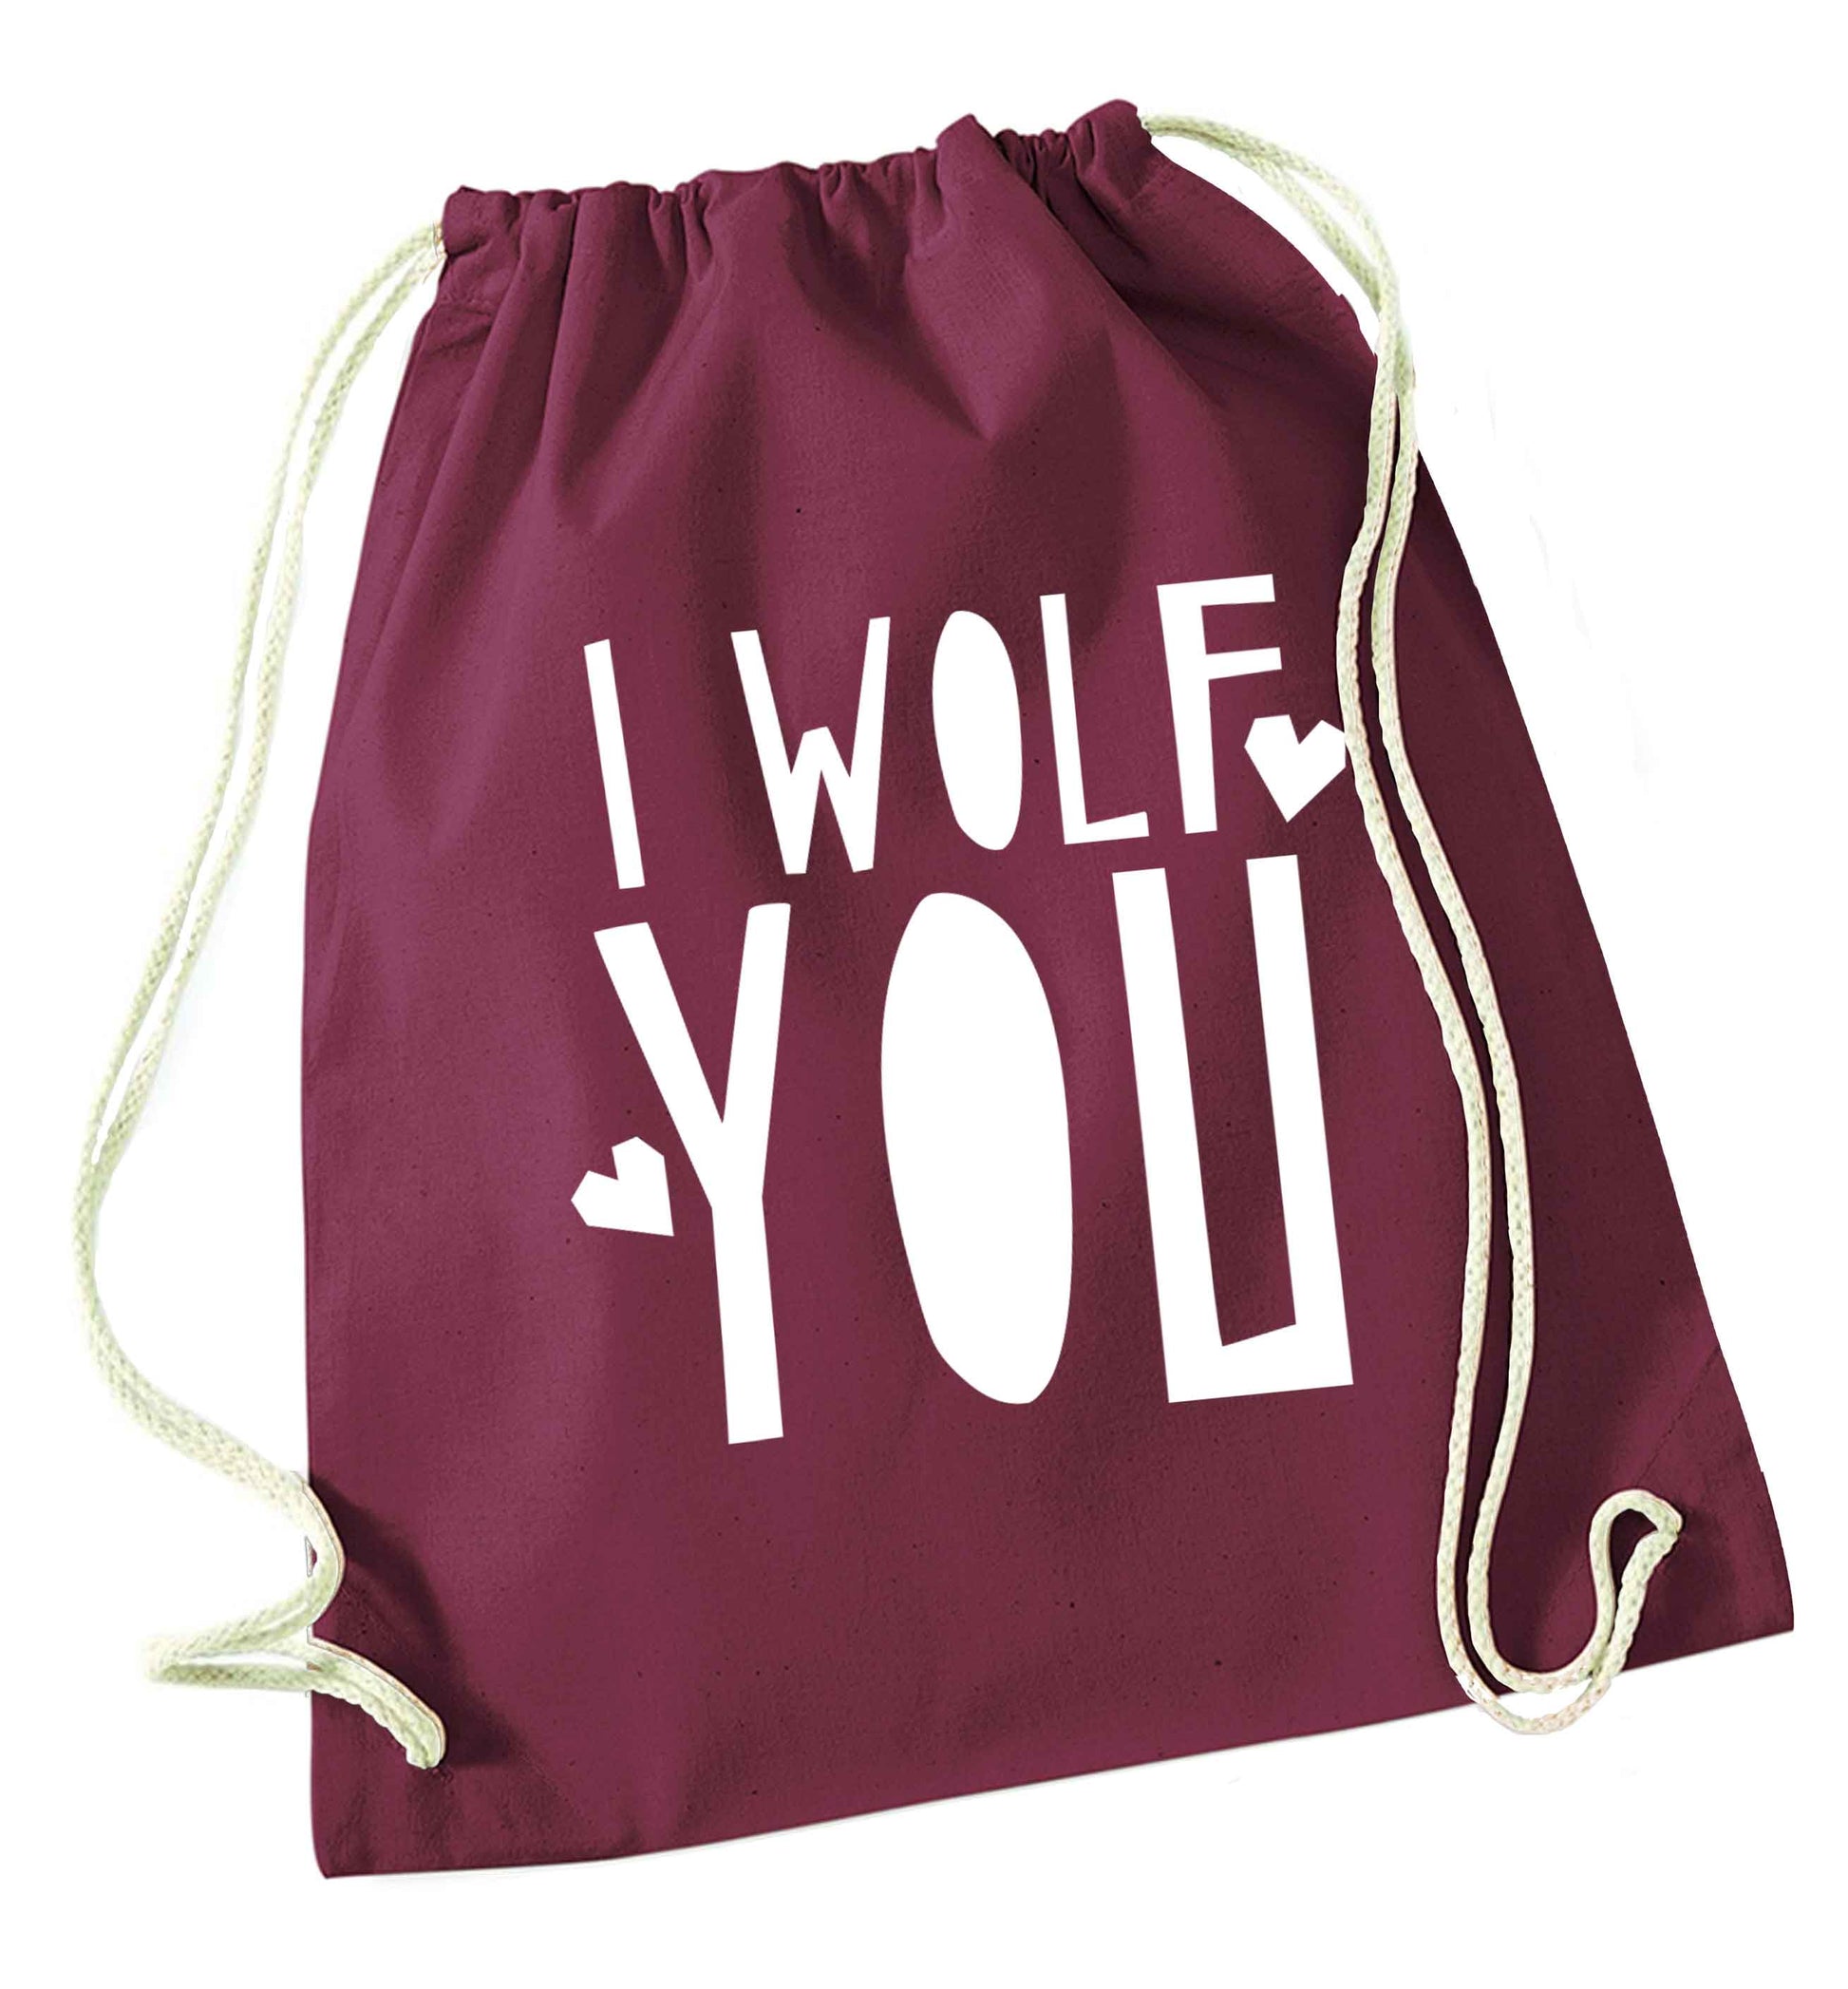 I wolf you maroon drawstring bag